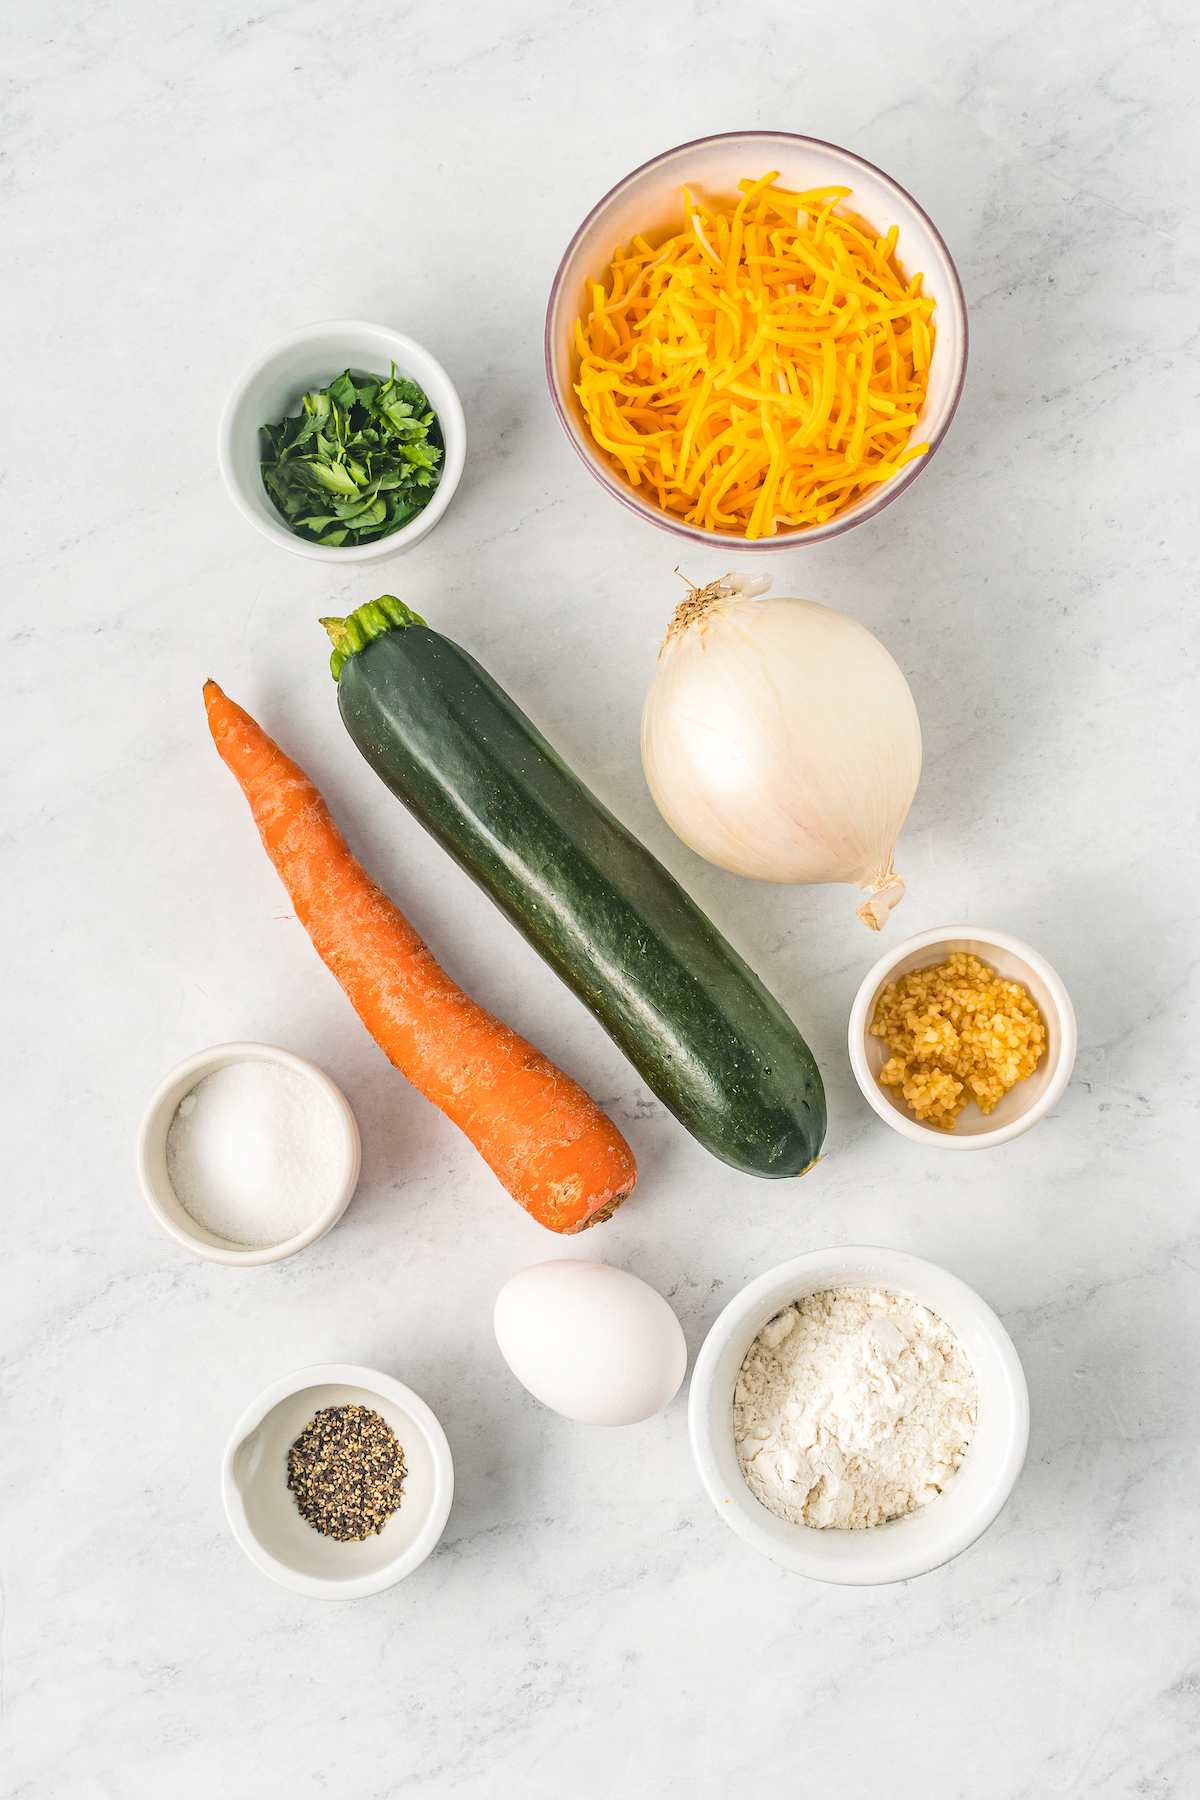 From top: Parsley, cheddar cheese, carrot, zucchini, onion, salt, egg, garlic, pepper, flour.